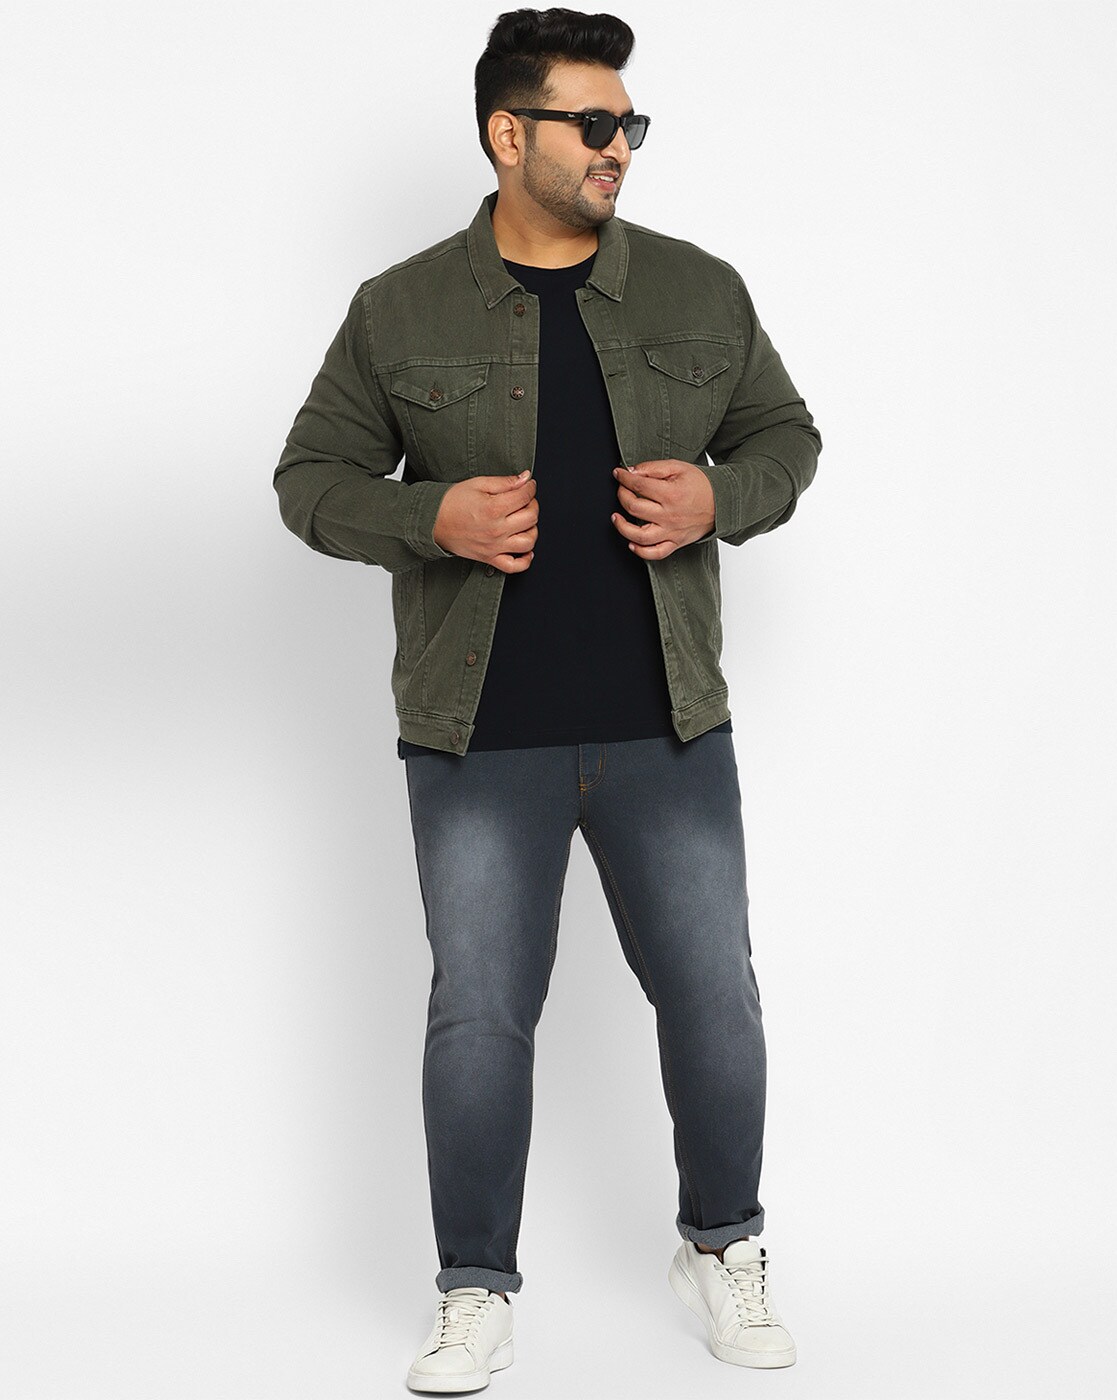 Denim Jackets Full Sleeves - Happy Turtle Style